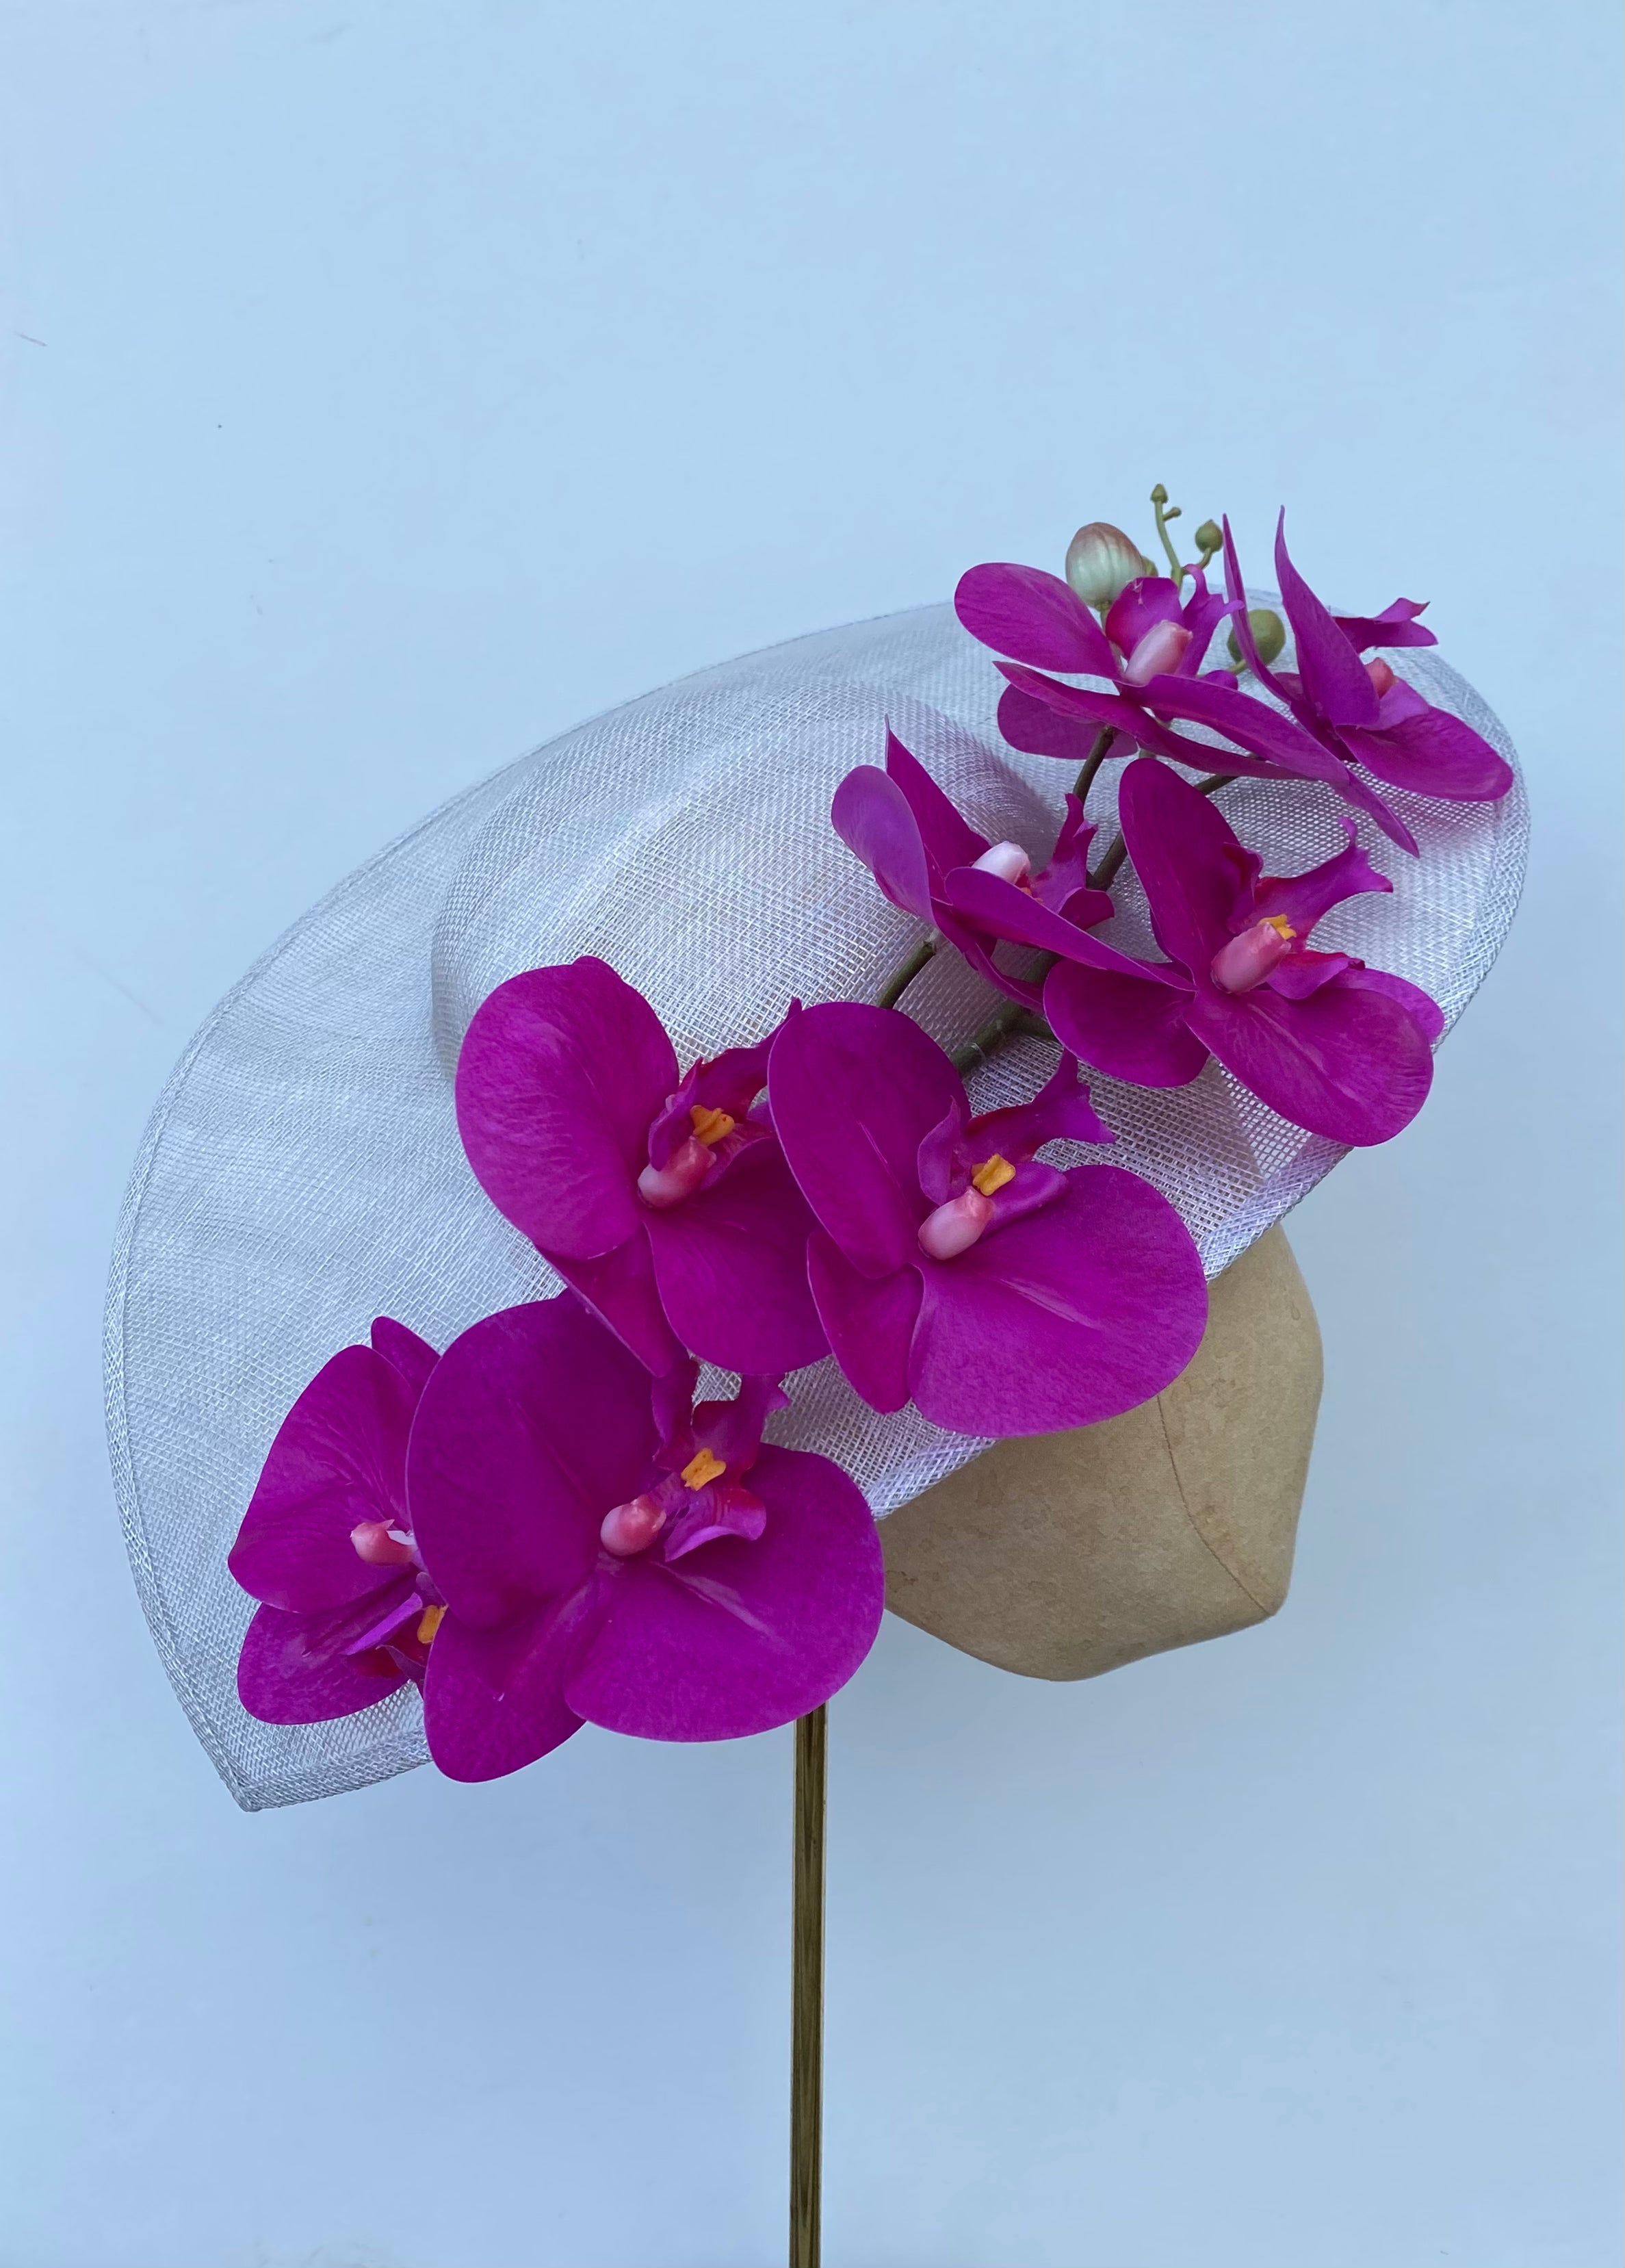 Fuchsia Orchid